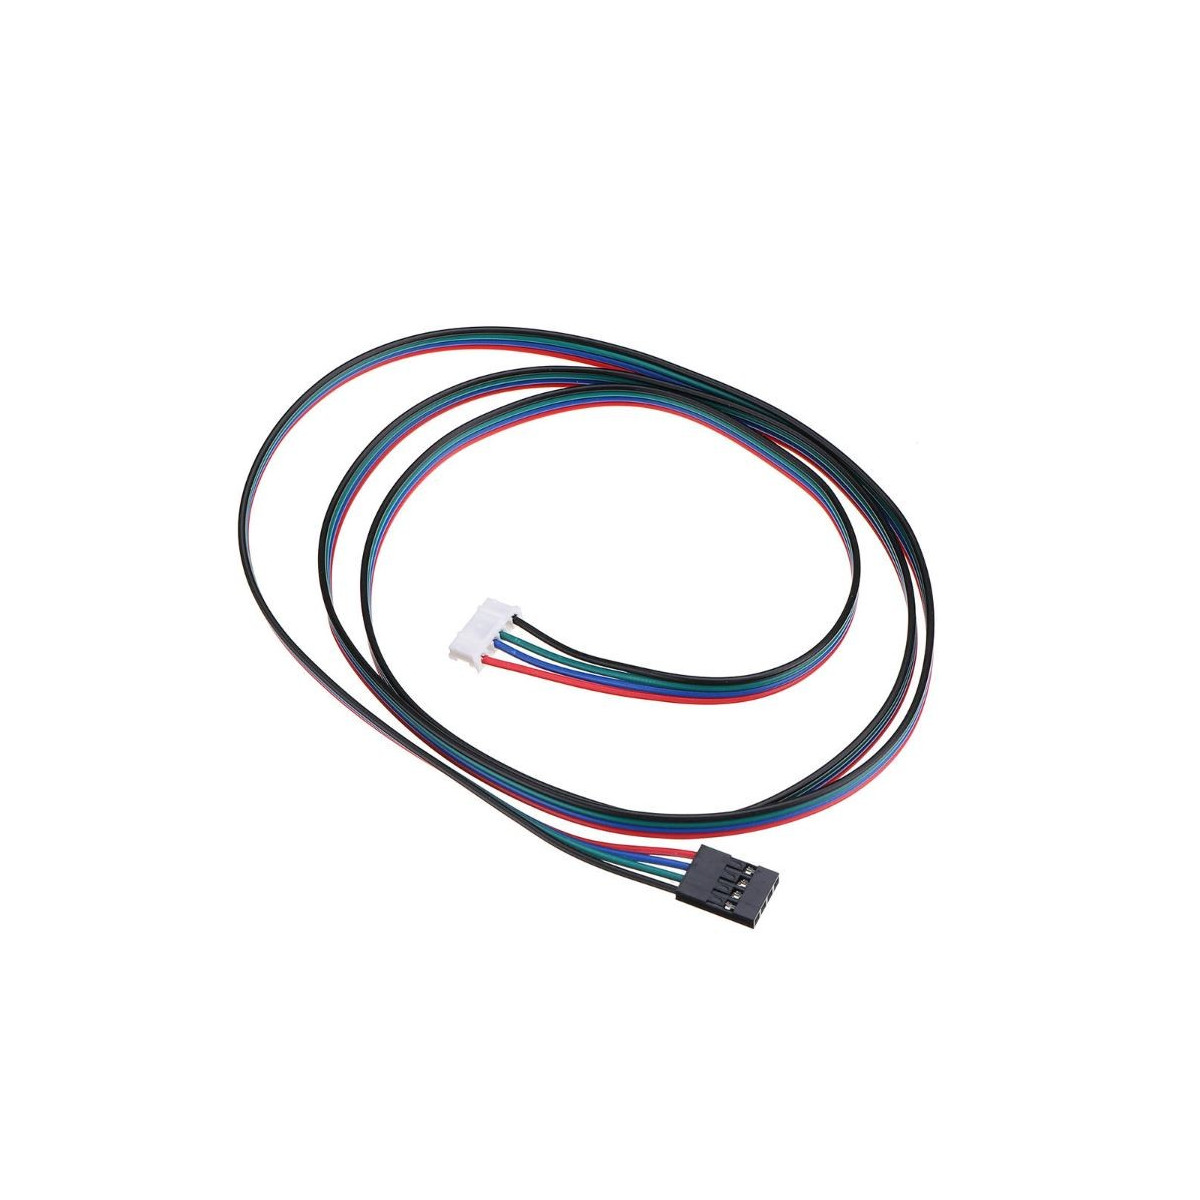 https://nde3d.co.za/1064-large_default/1m-dupont-line-stepper-motor-extension-cable.jpg